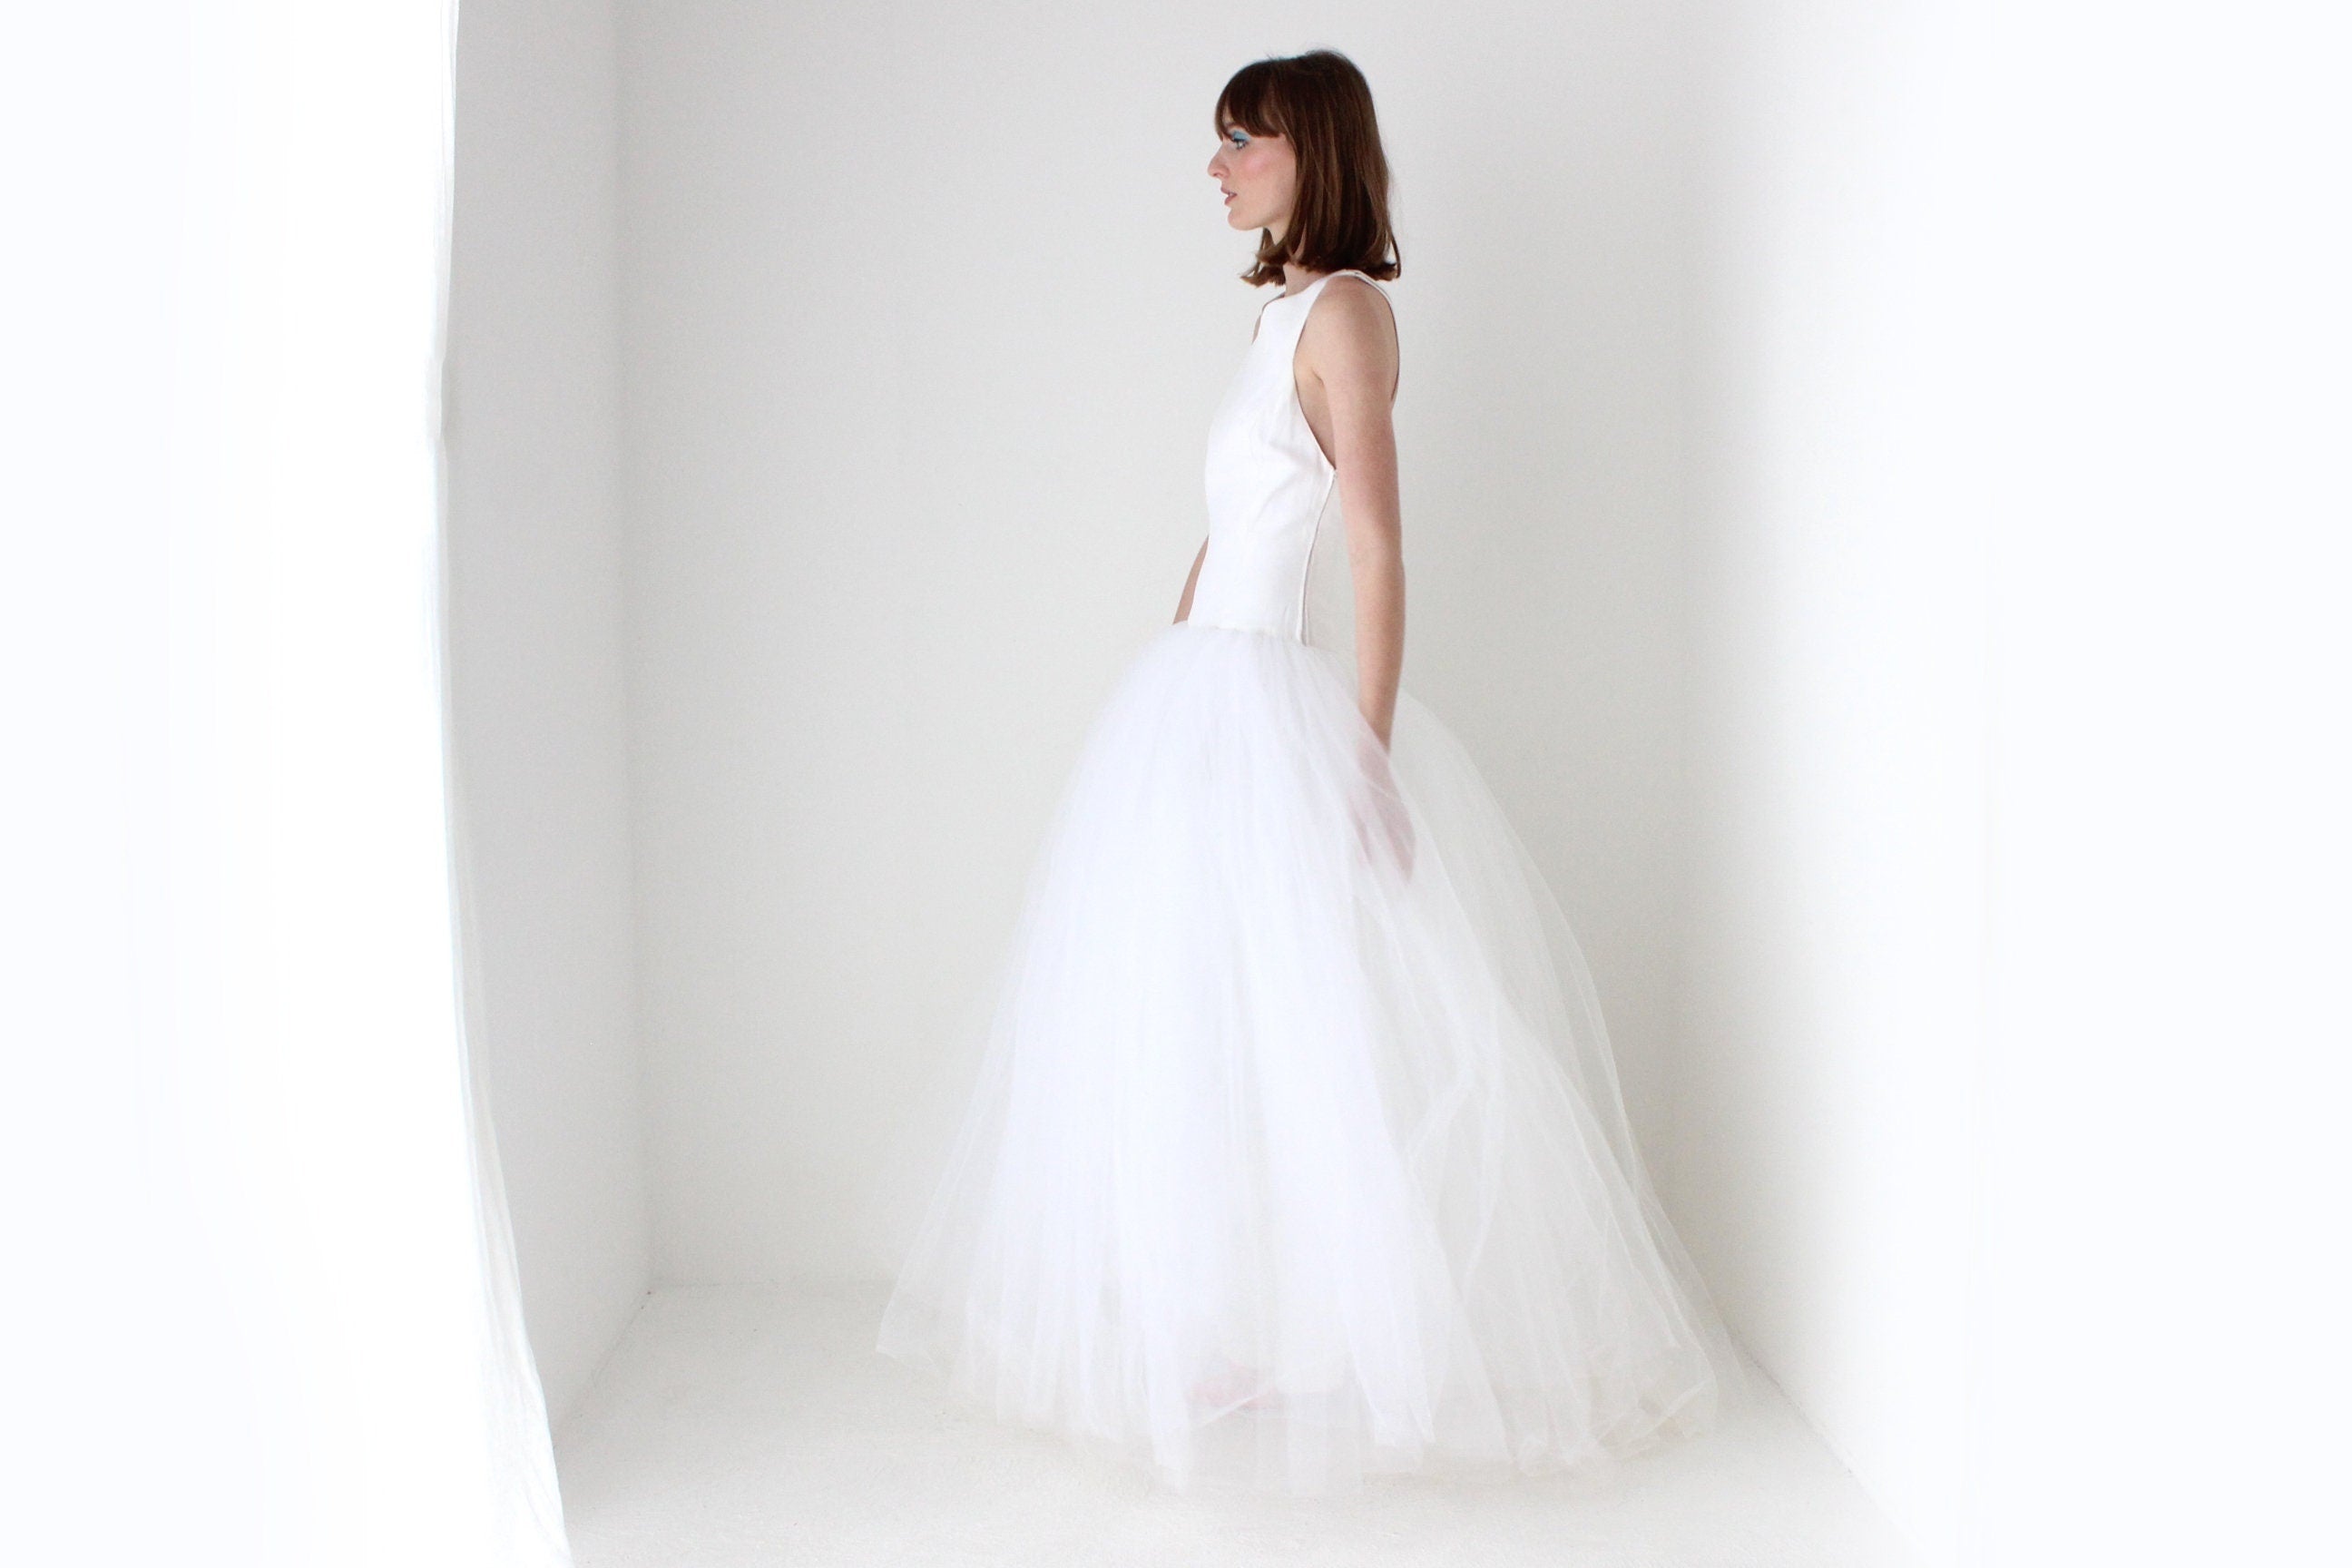 90s Custom Made Bridal - High Neck & Voluminous Tulle Wedding Gown